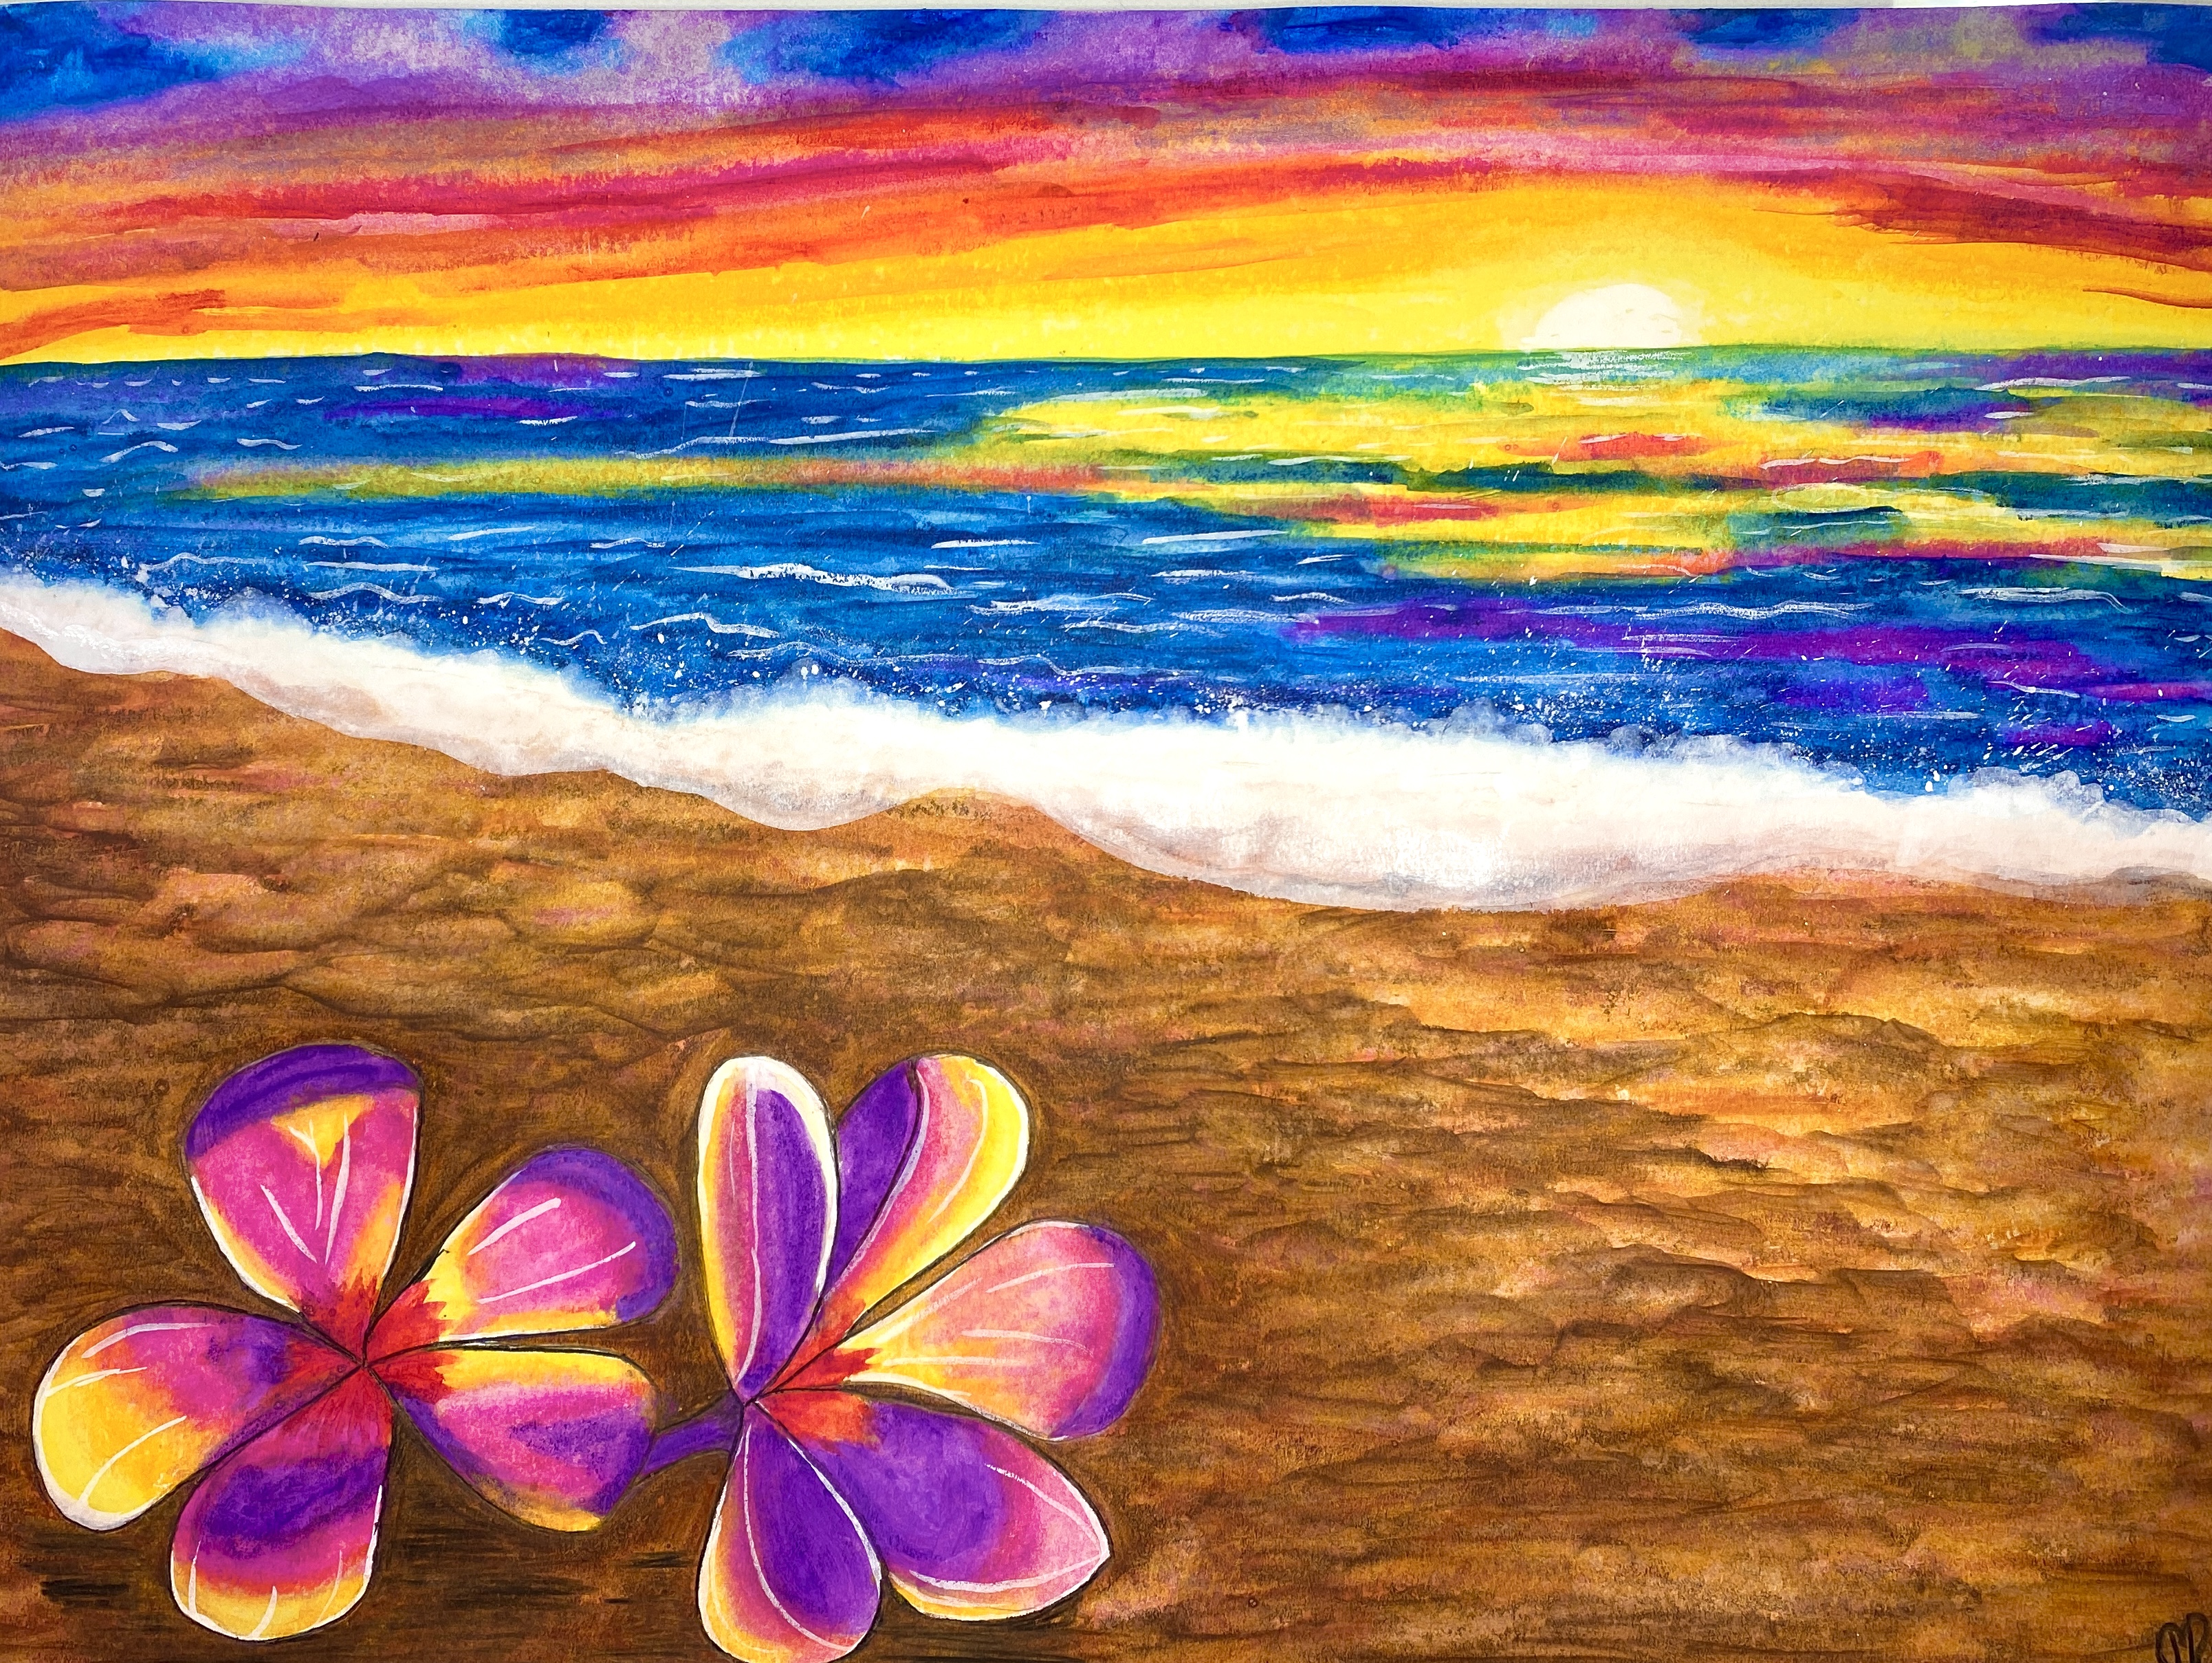 "Flowers in the Sand," by Dawn Marie Paul 11 x 14 inch Mixed Media Original Art by Dawn Marie Paul at DMPaul.com